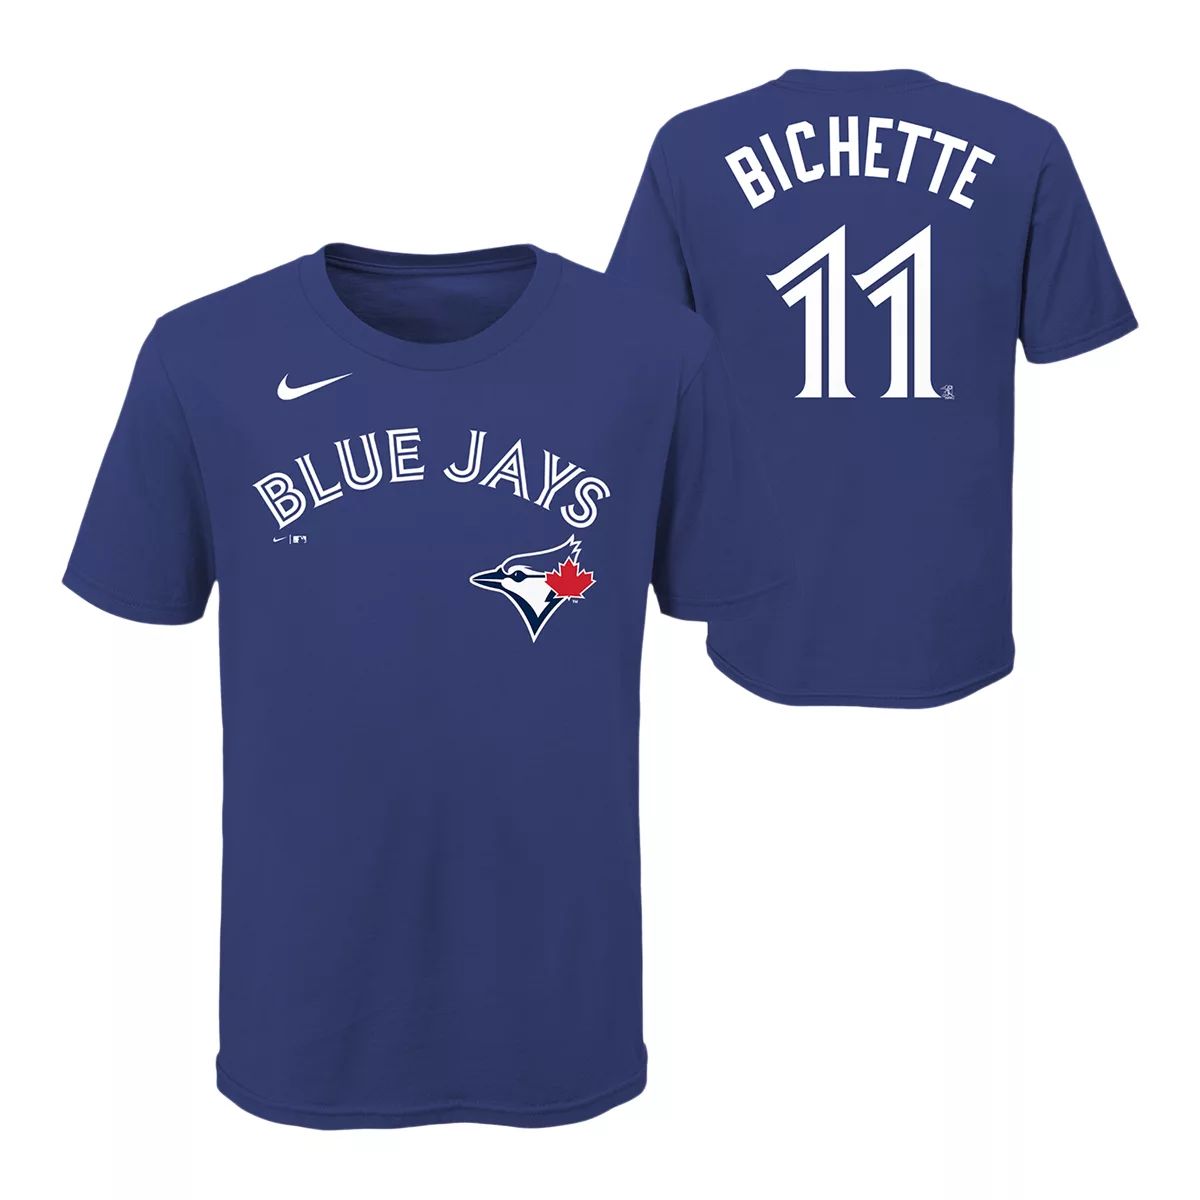 Unisex Children's Toronto Blue Jays MLB Jerseys for sale